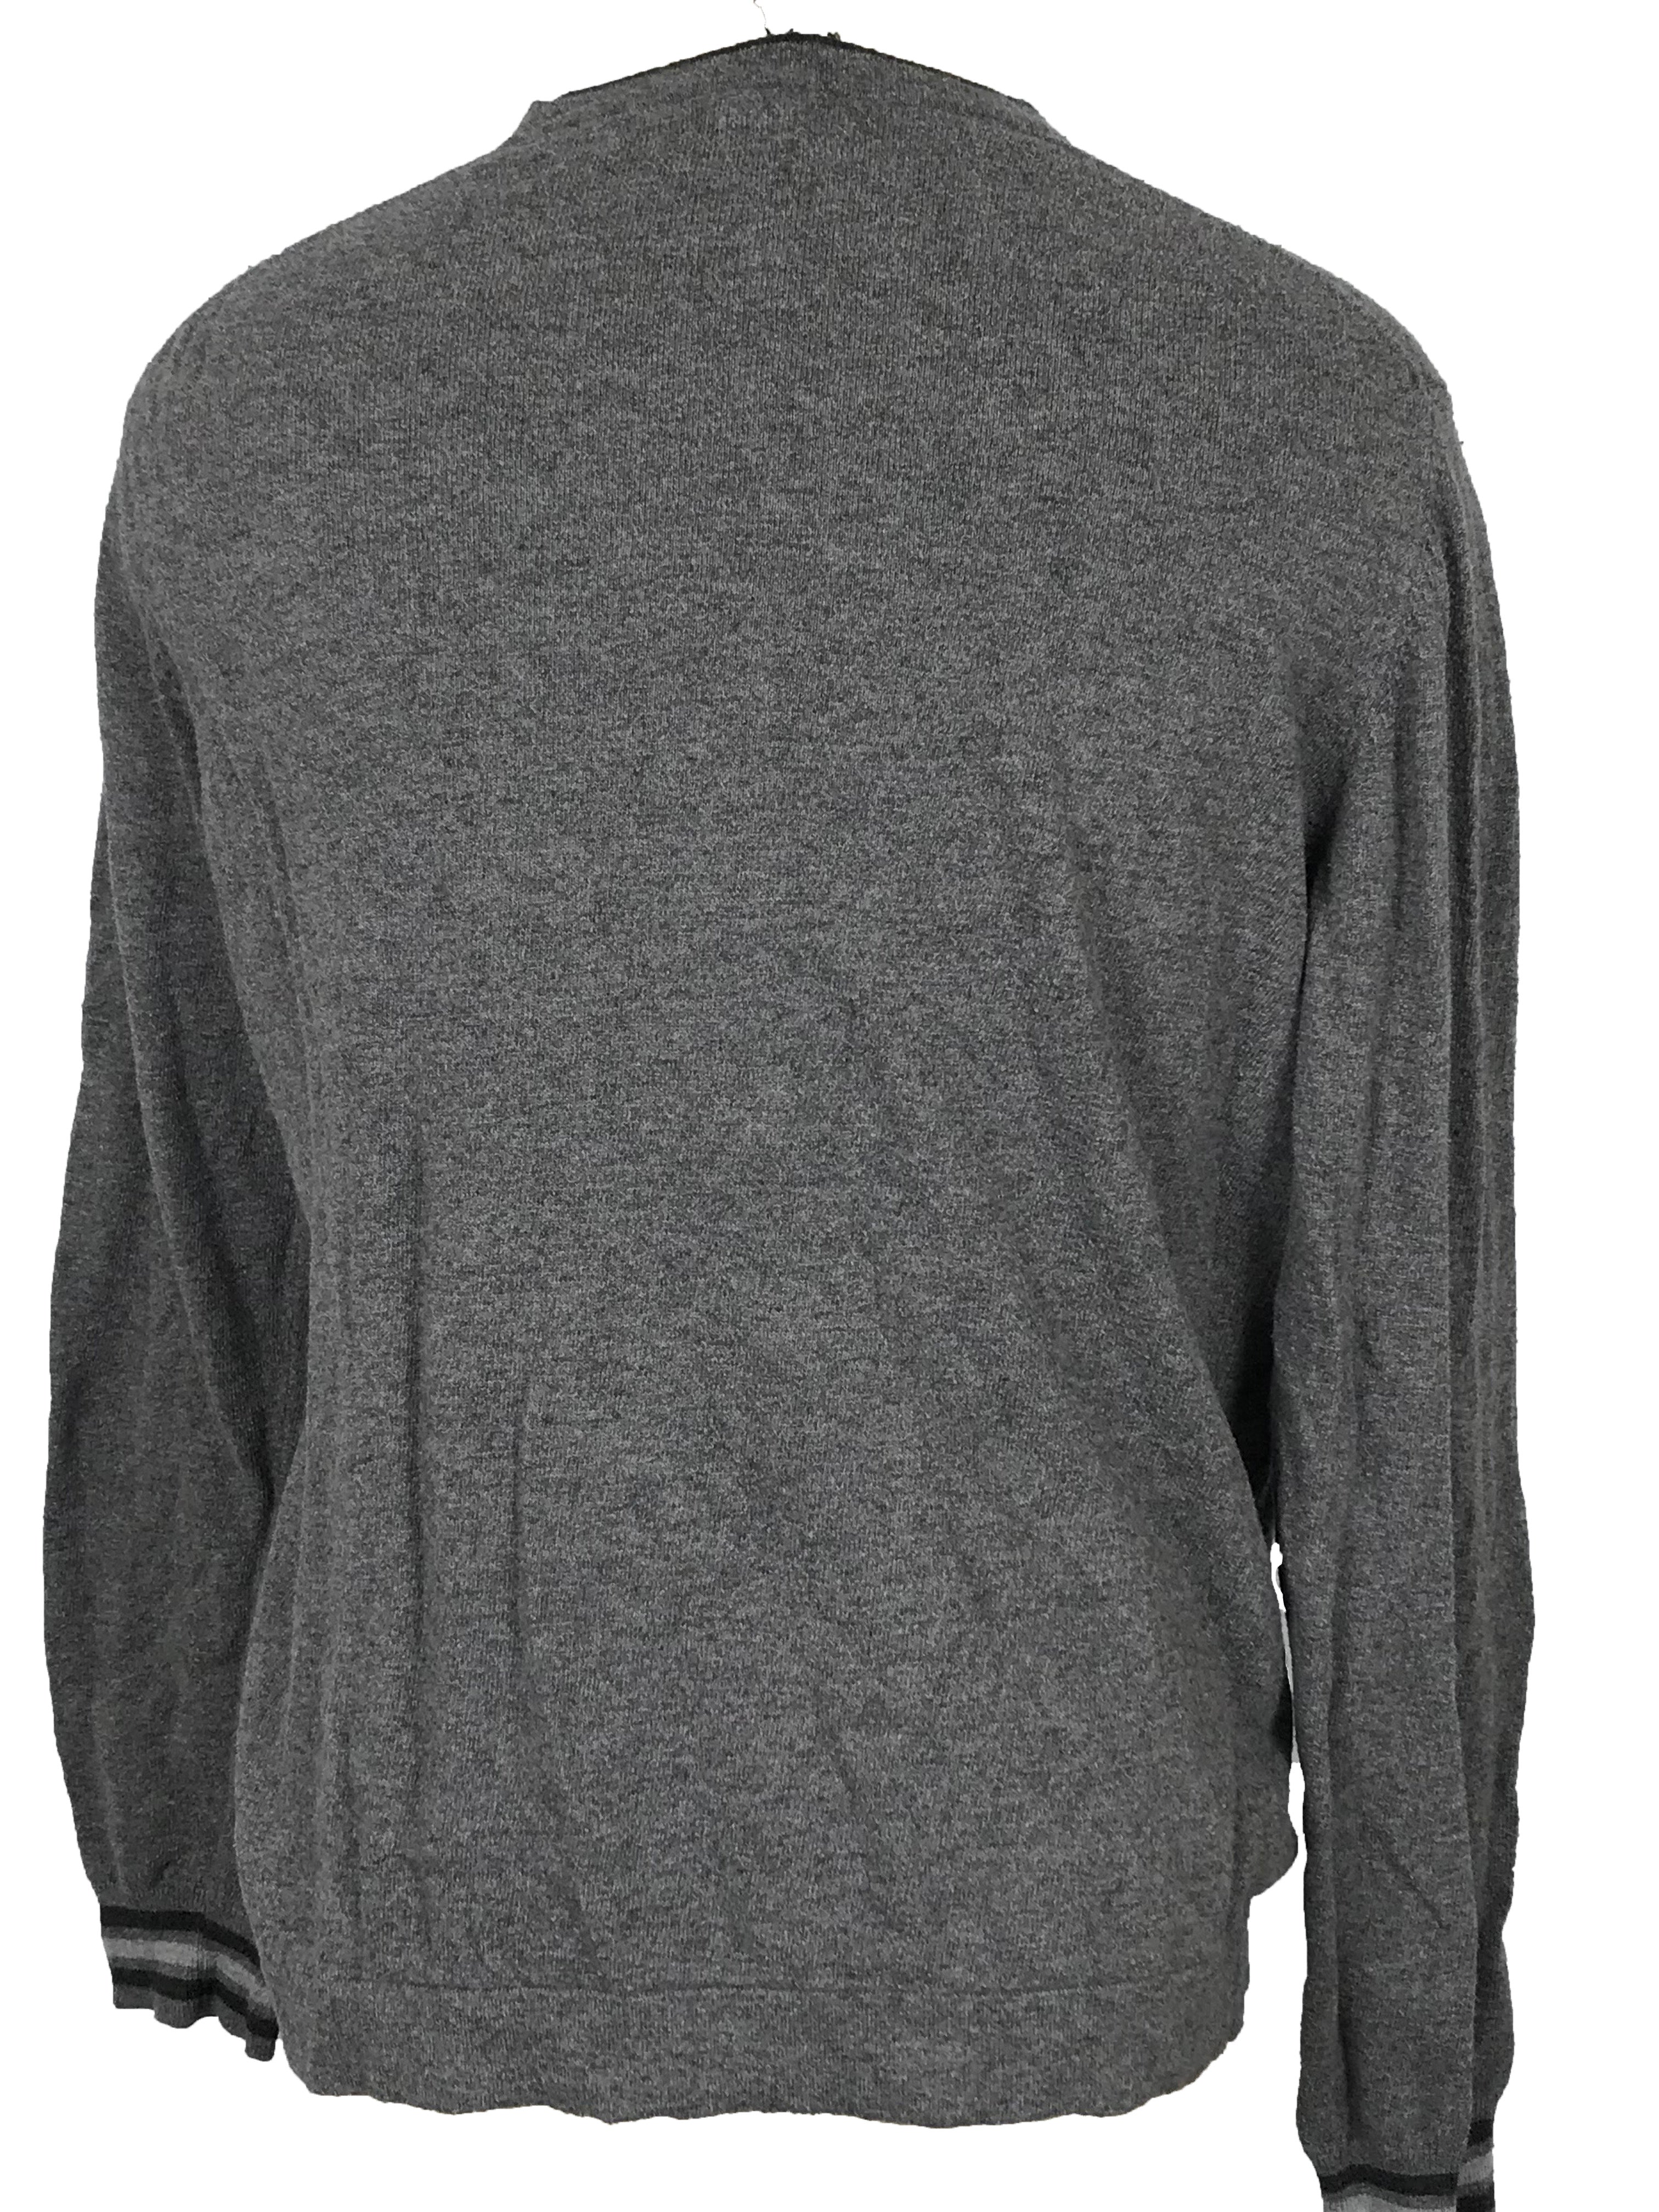 Calvin Klein Grey Long Sleeve Knit Sweater Men's Size L/G